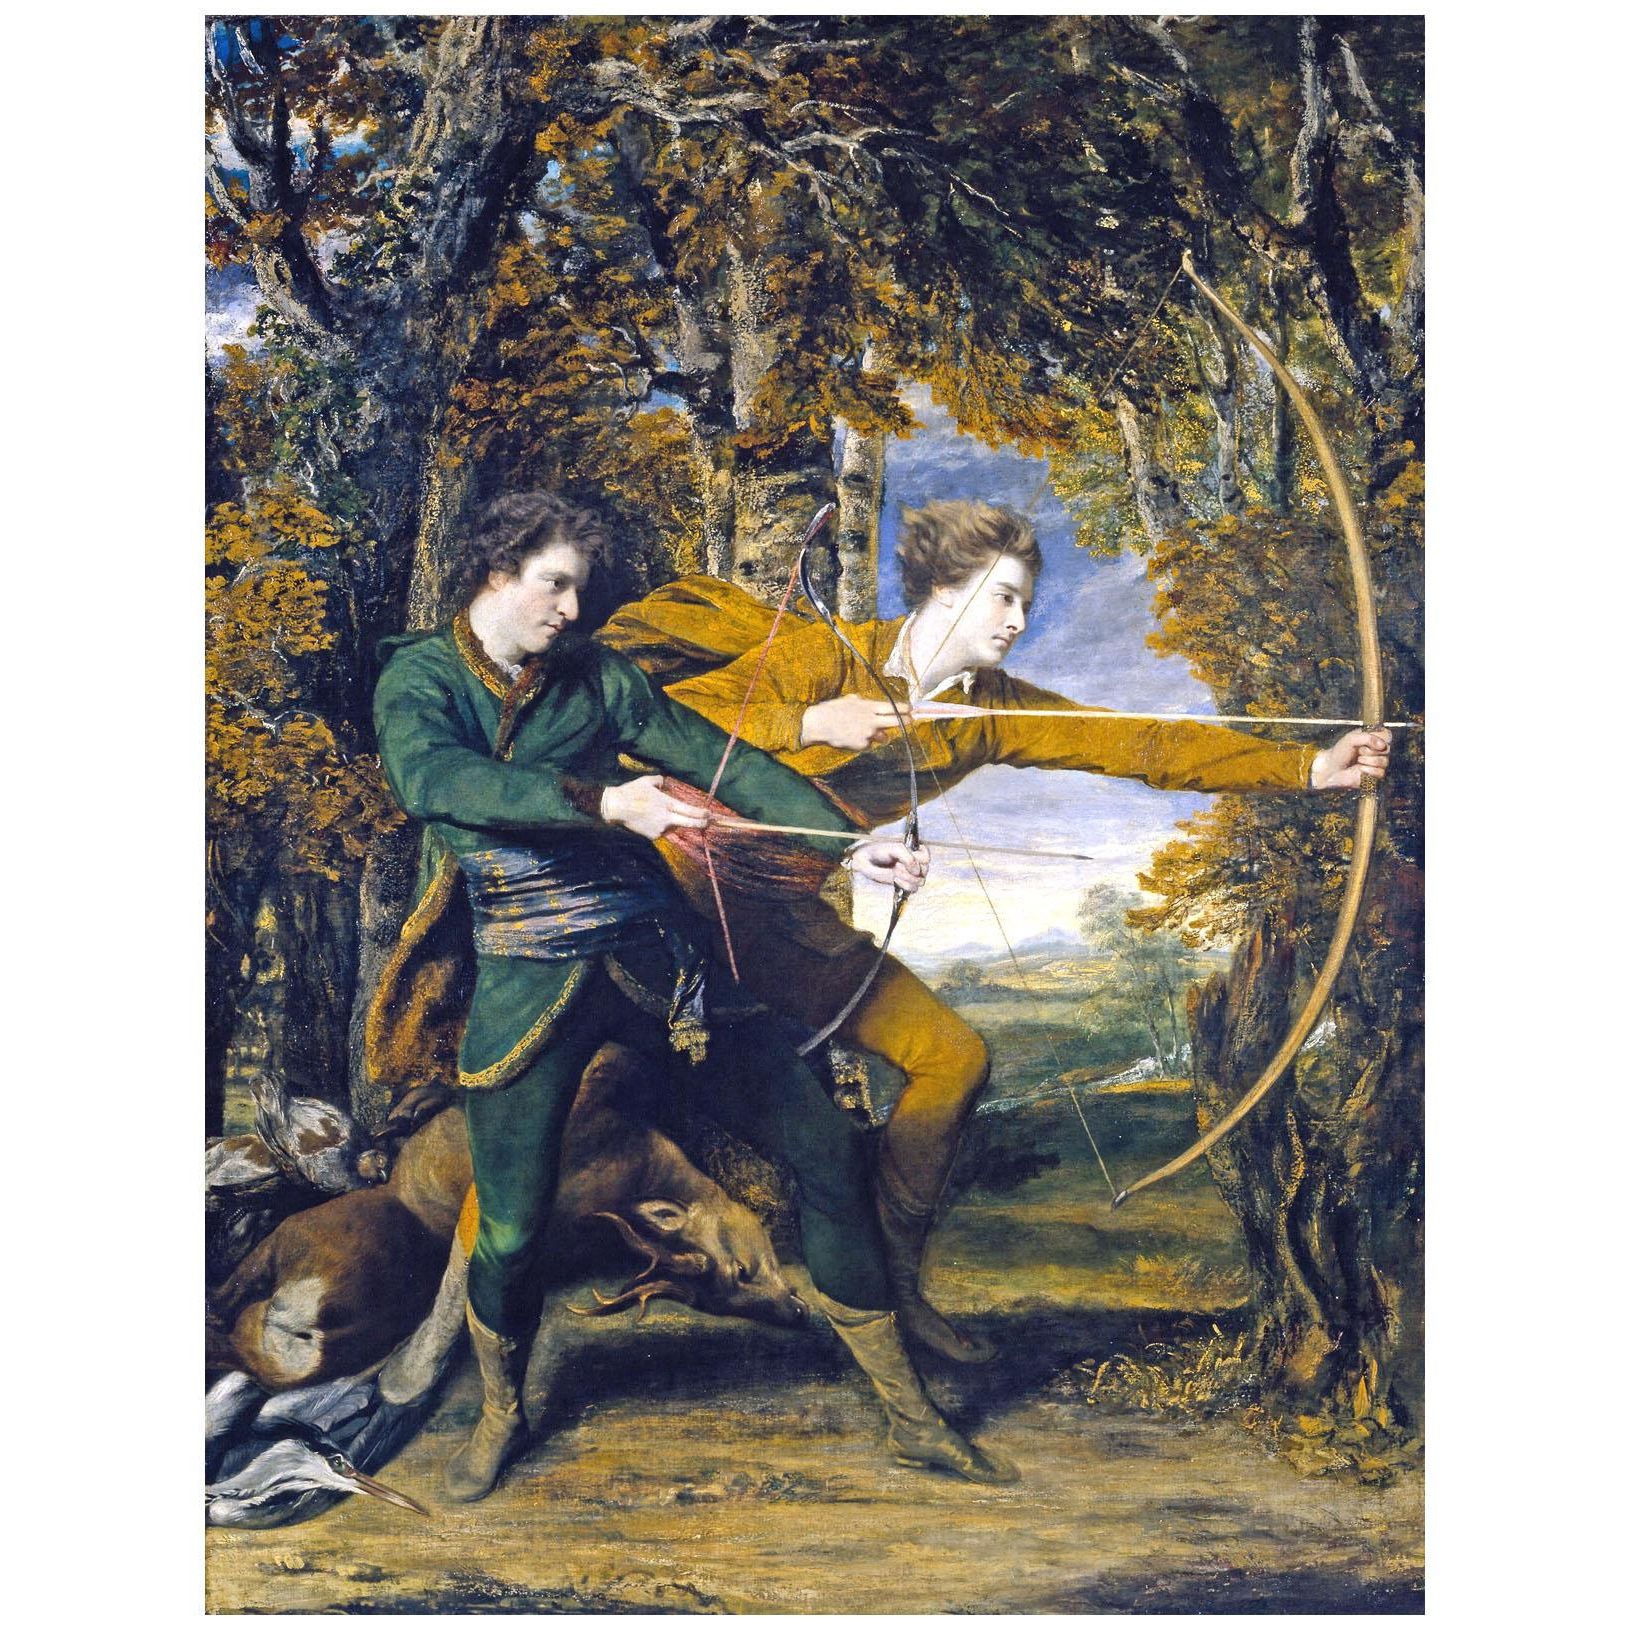 Joshua Reynolds. The Archers. 1769. Tate Britain